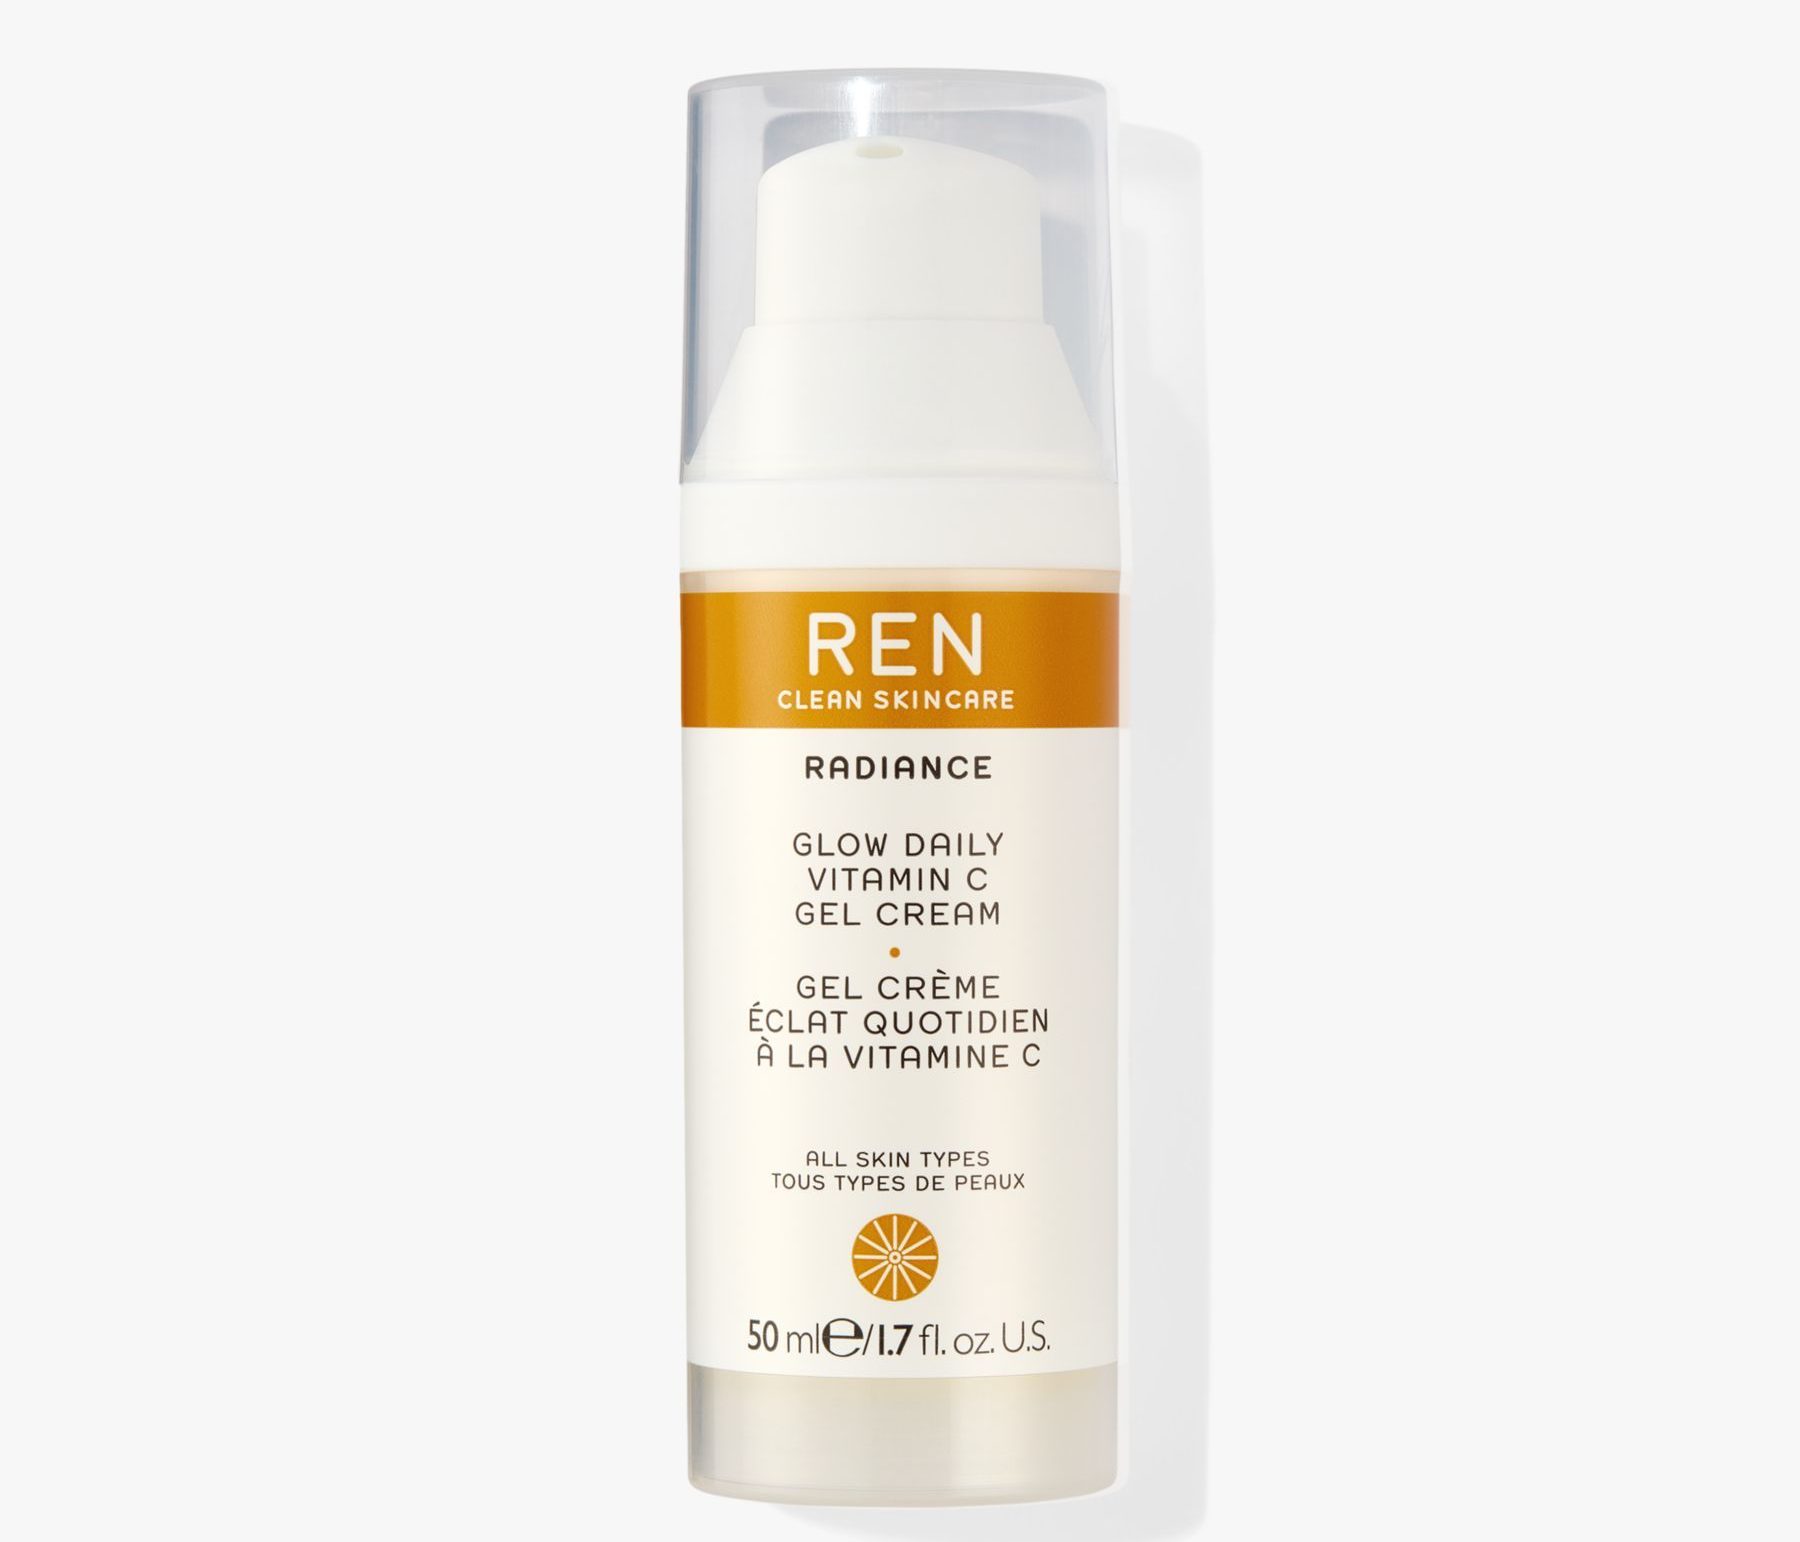 Ren Clean Skincare Radiance Glow Daily Vitamin C Gel Cream